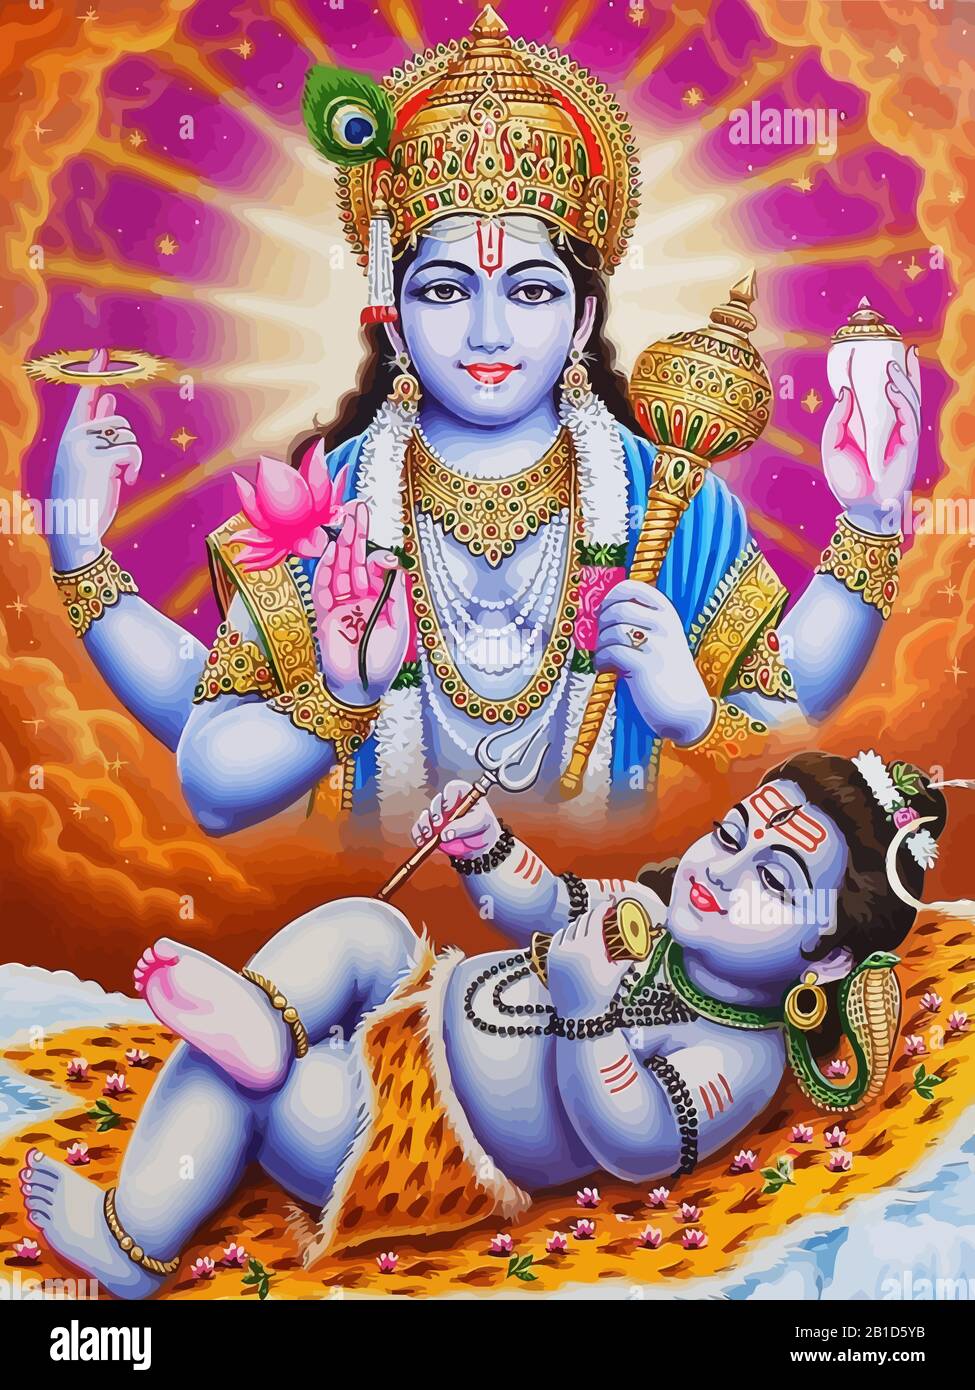 holy lord rama hinduism spiritual baby shiva illustration Stock ...